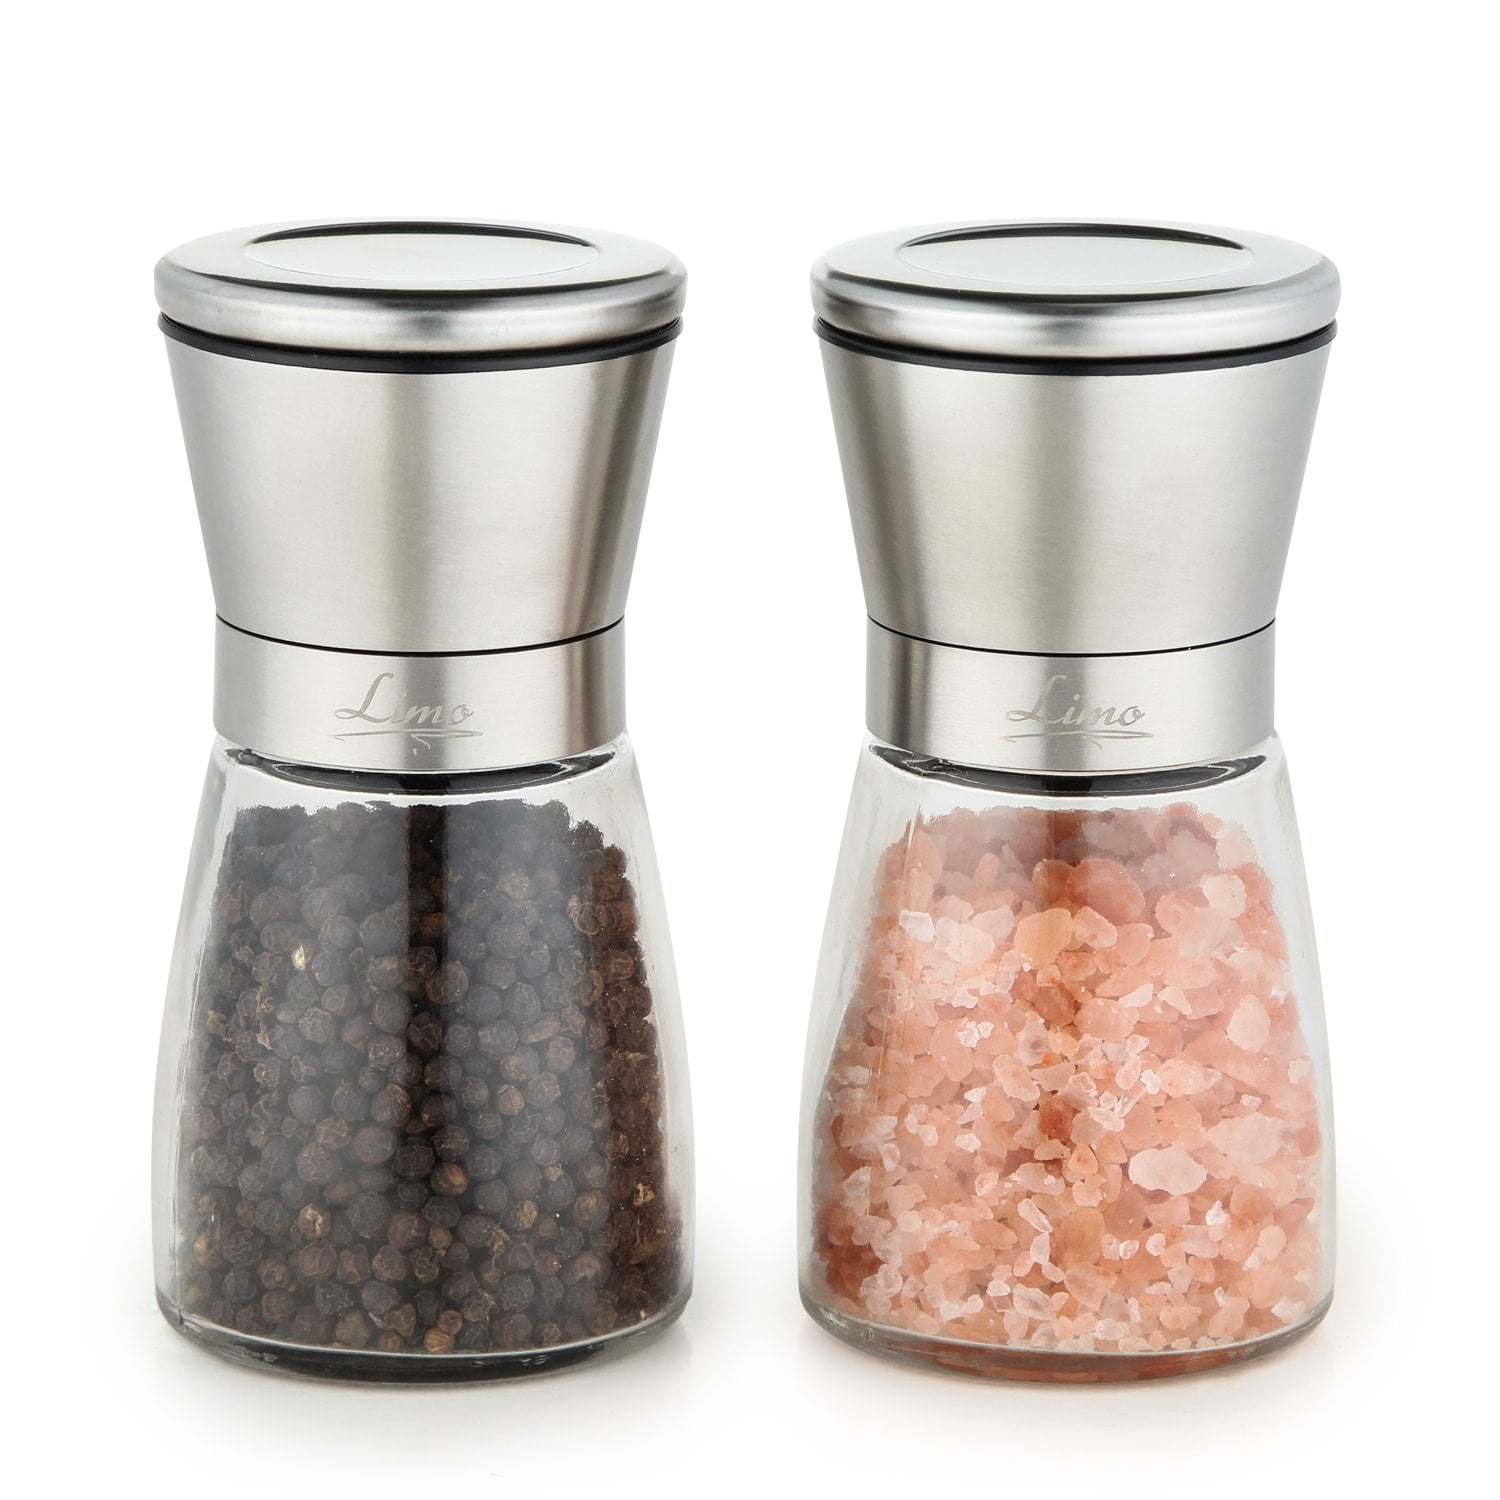 Cheap salt and pepper grinders